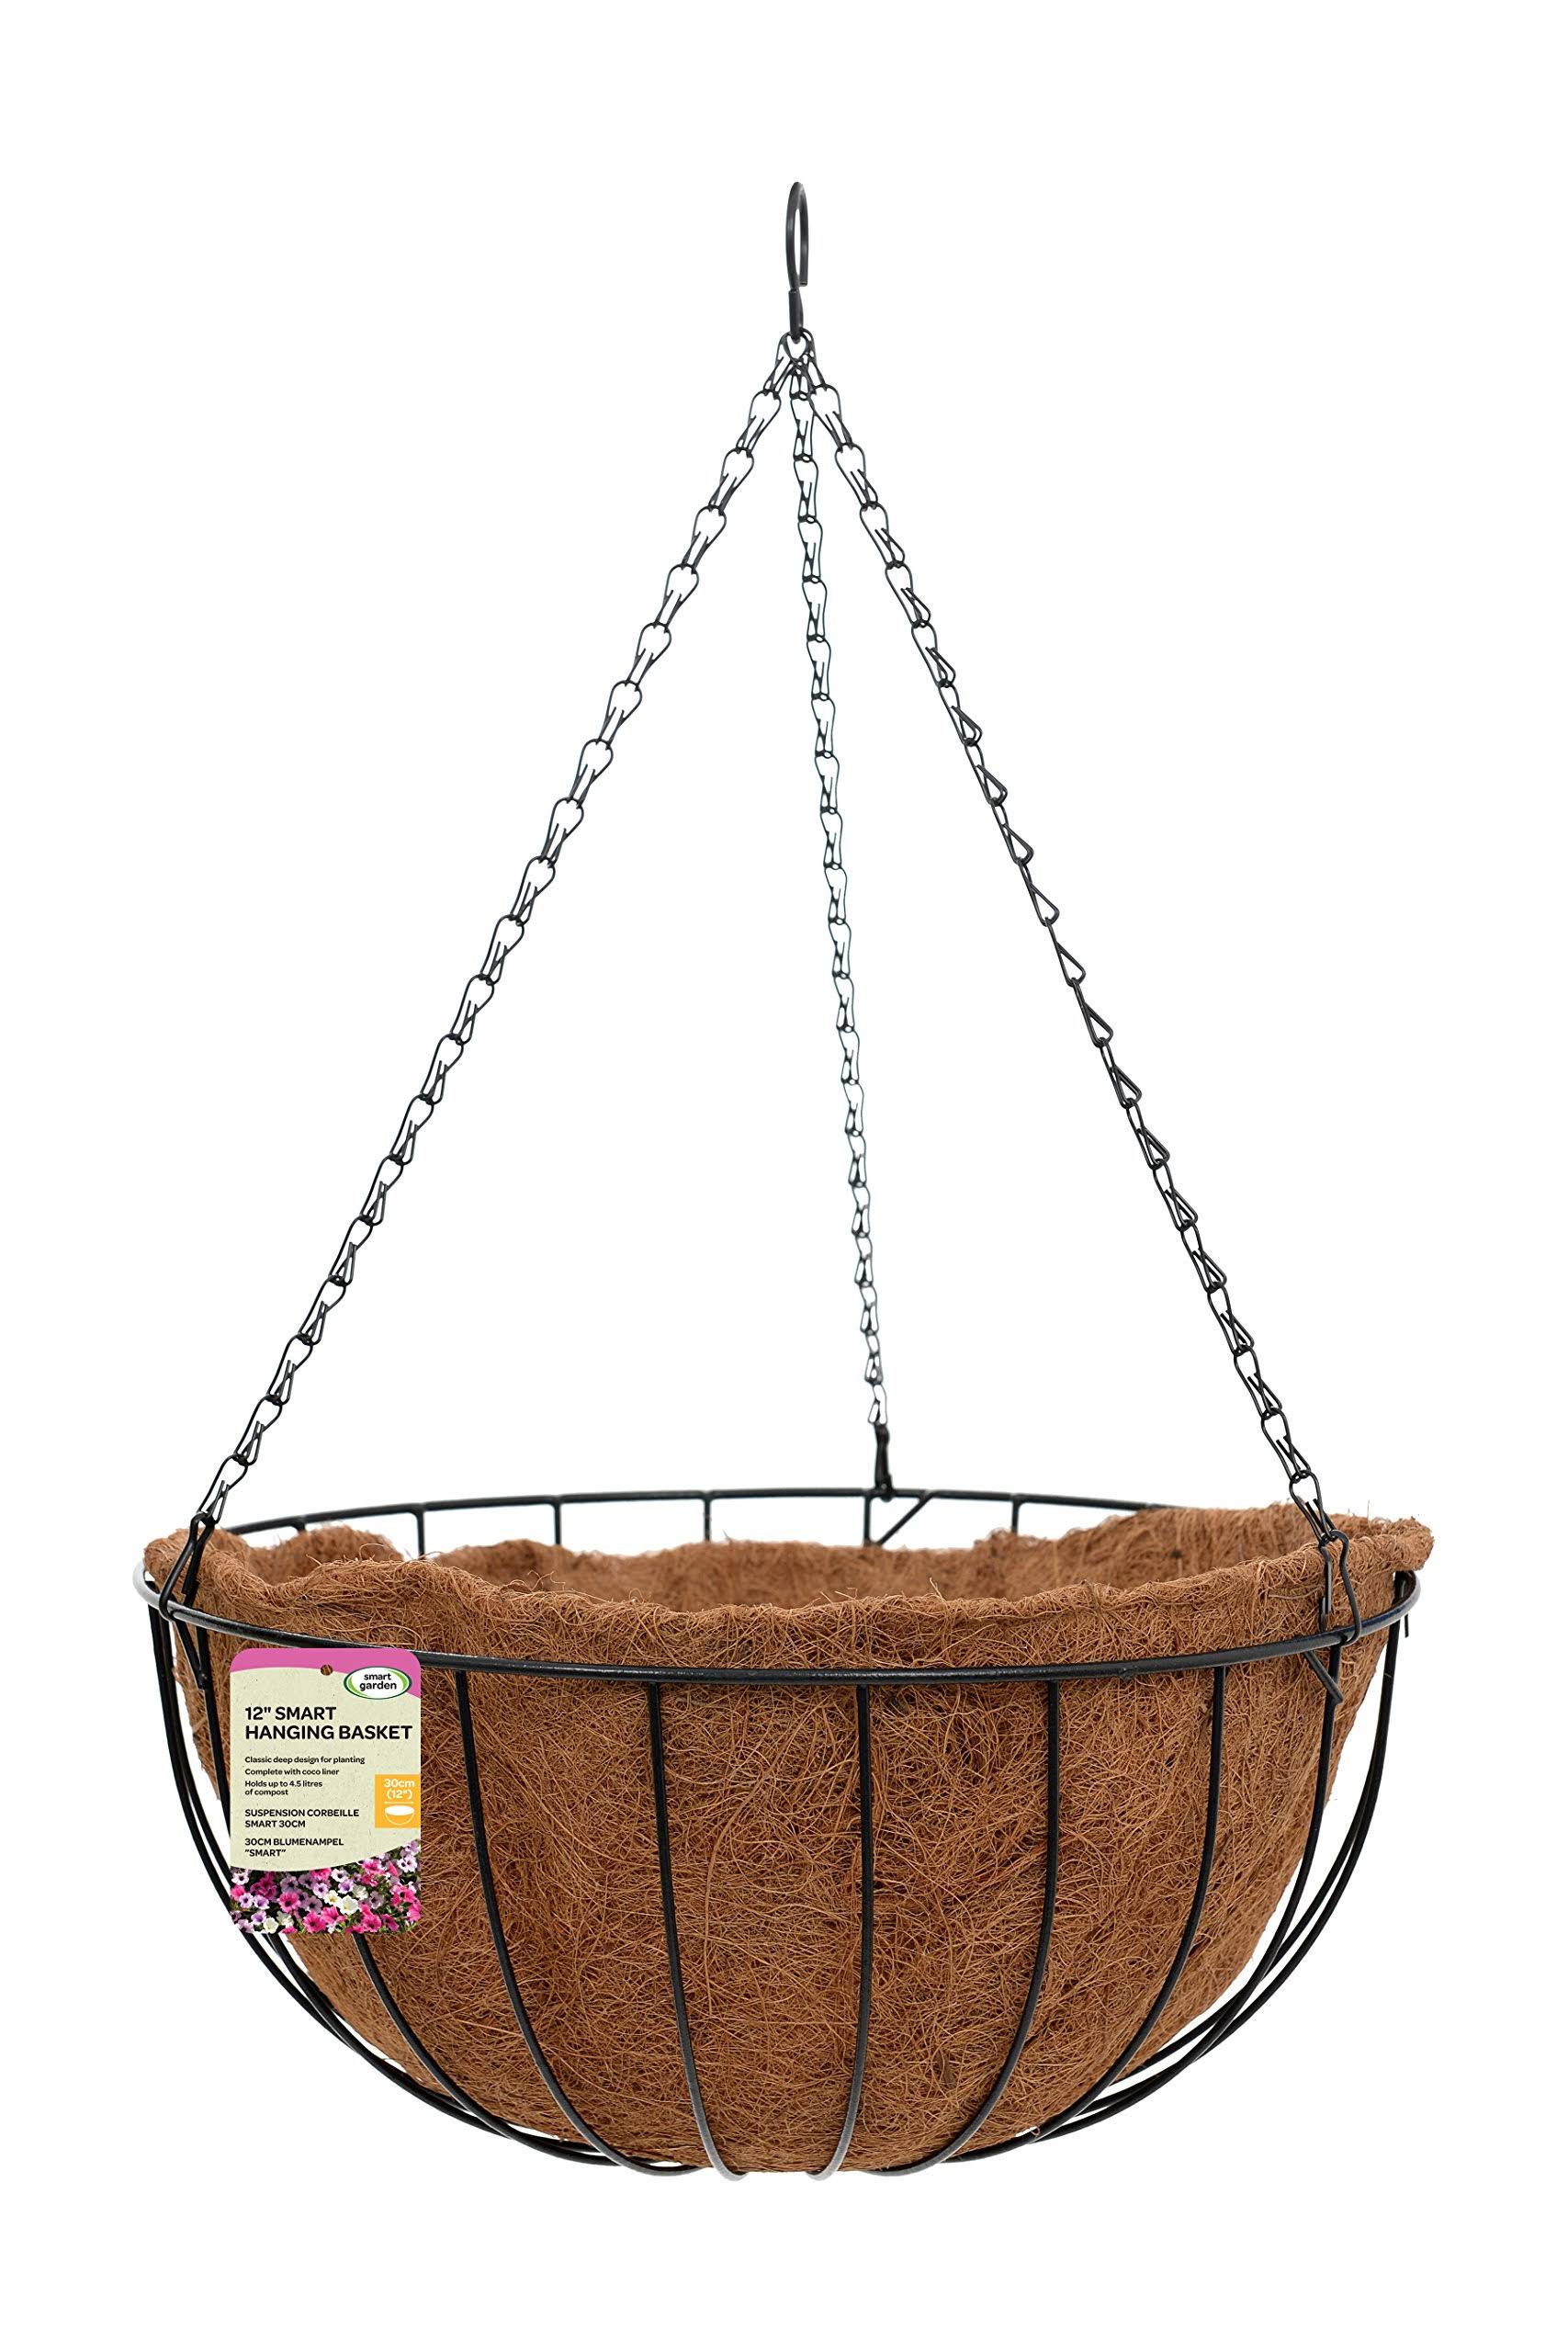 12" Smart Hanging Basket